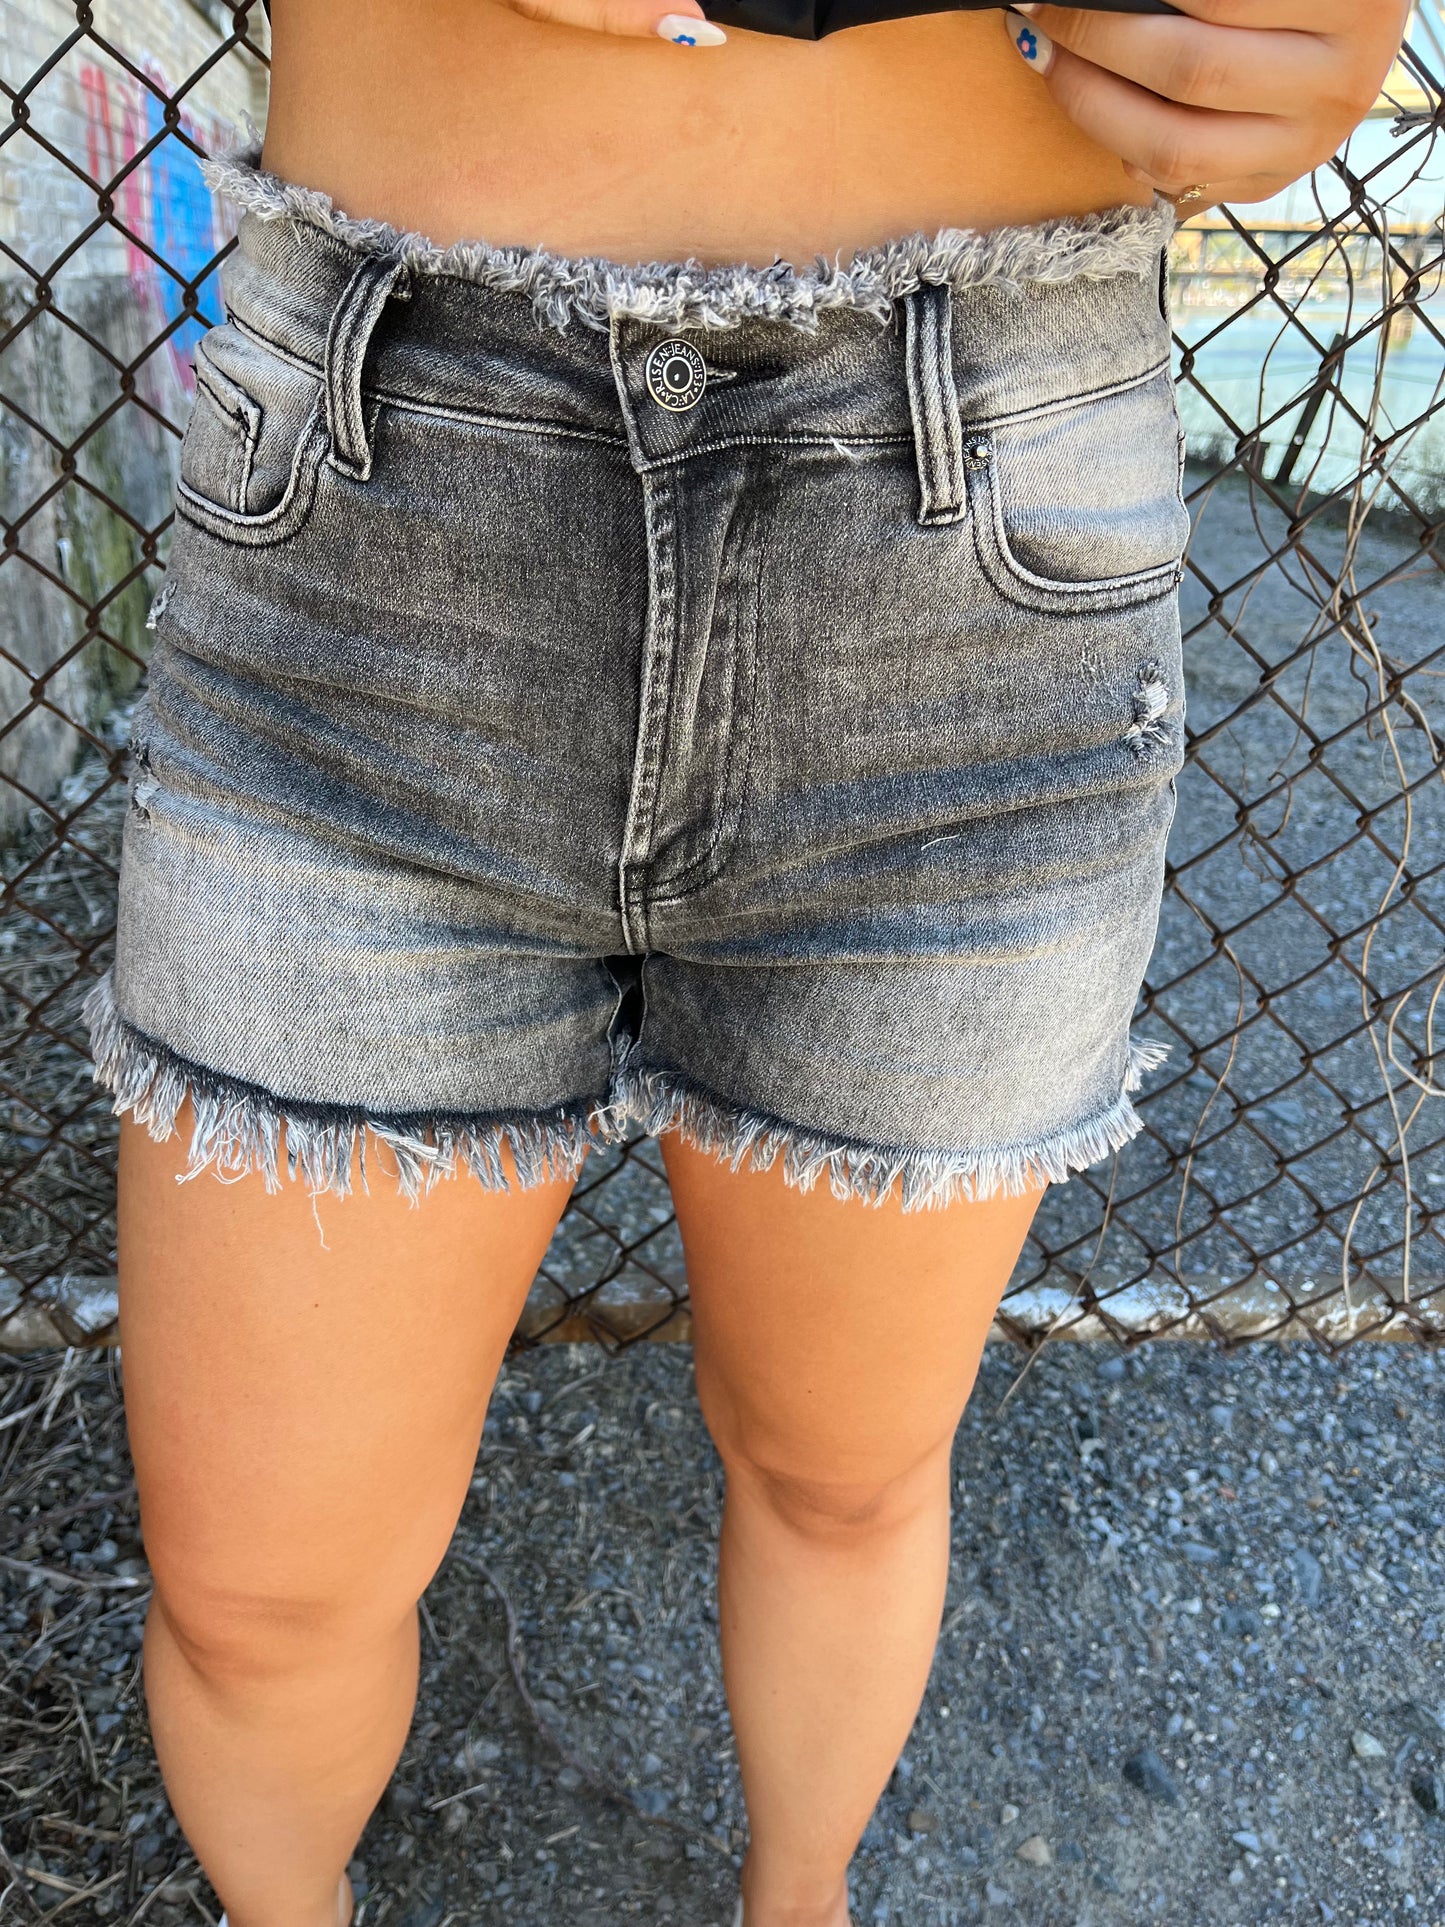 Grunge Girl Shorts